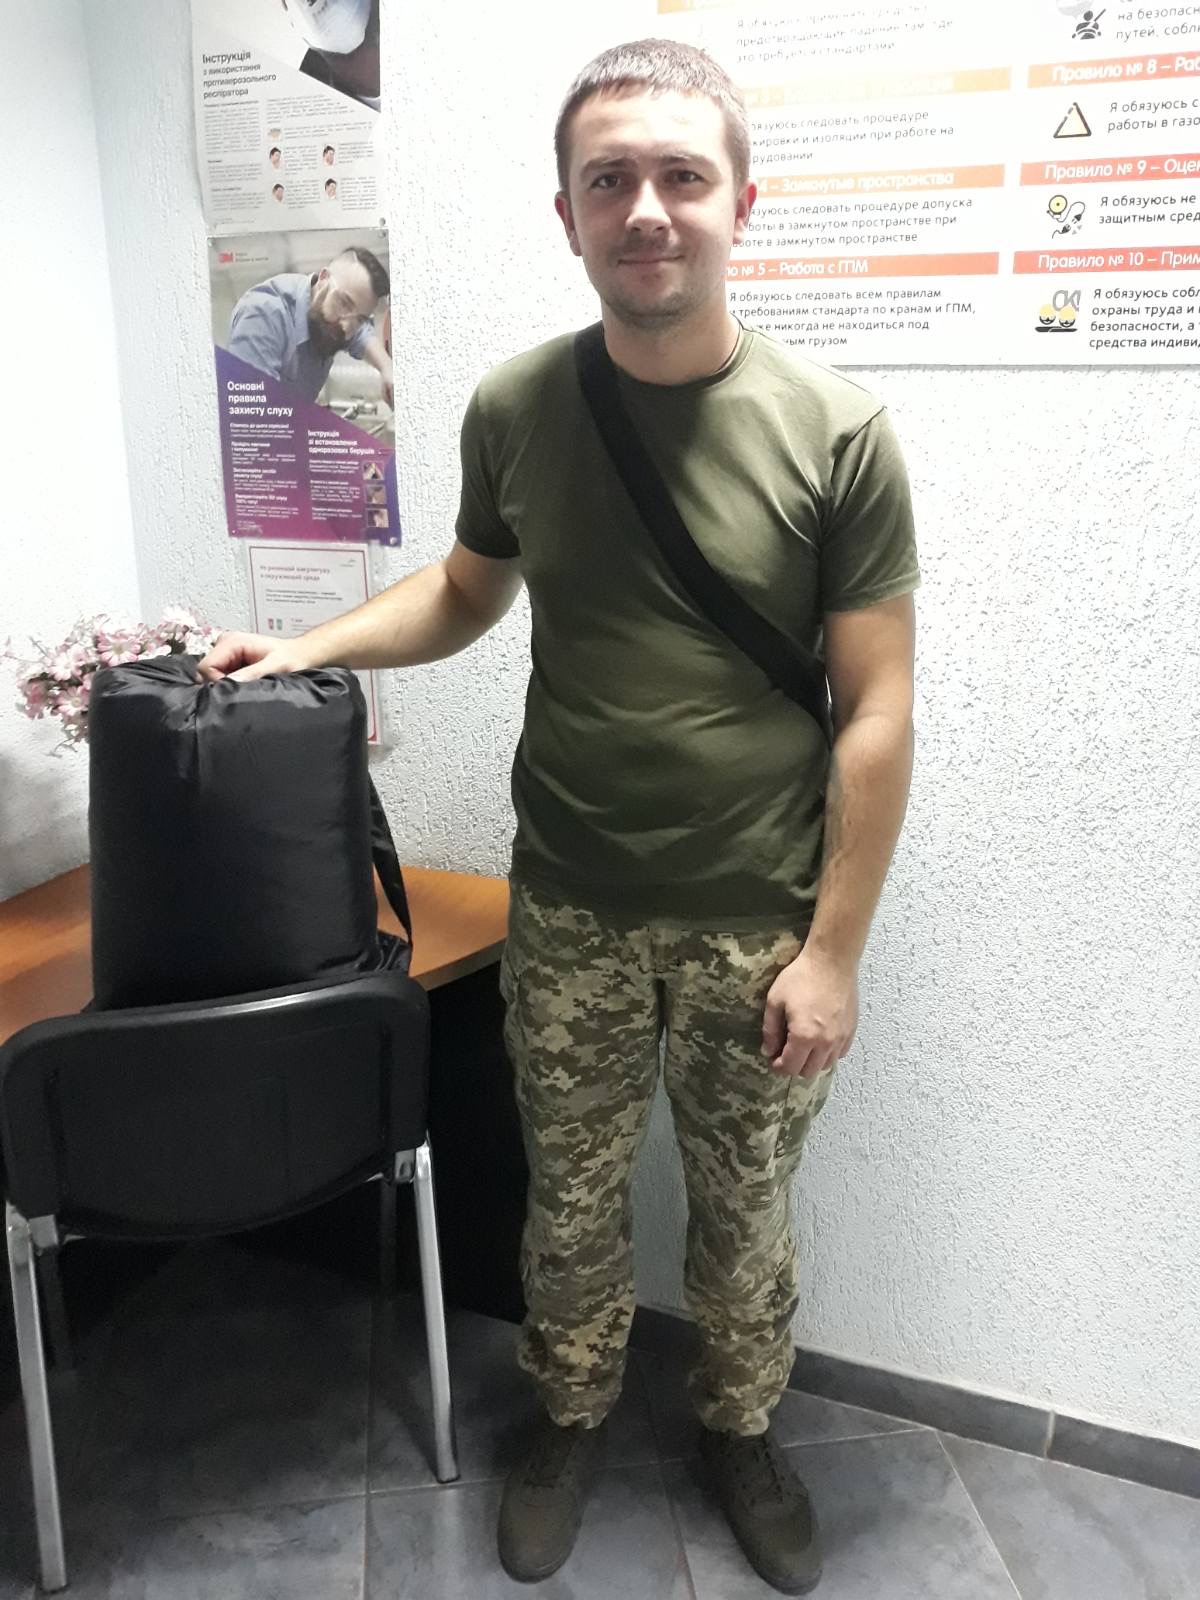 Ukraine soldier with USW provided sleeping bag